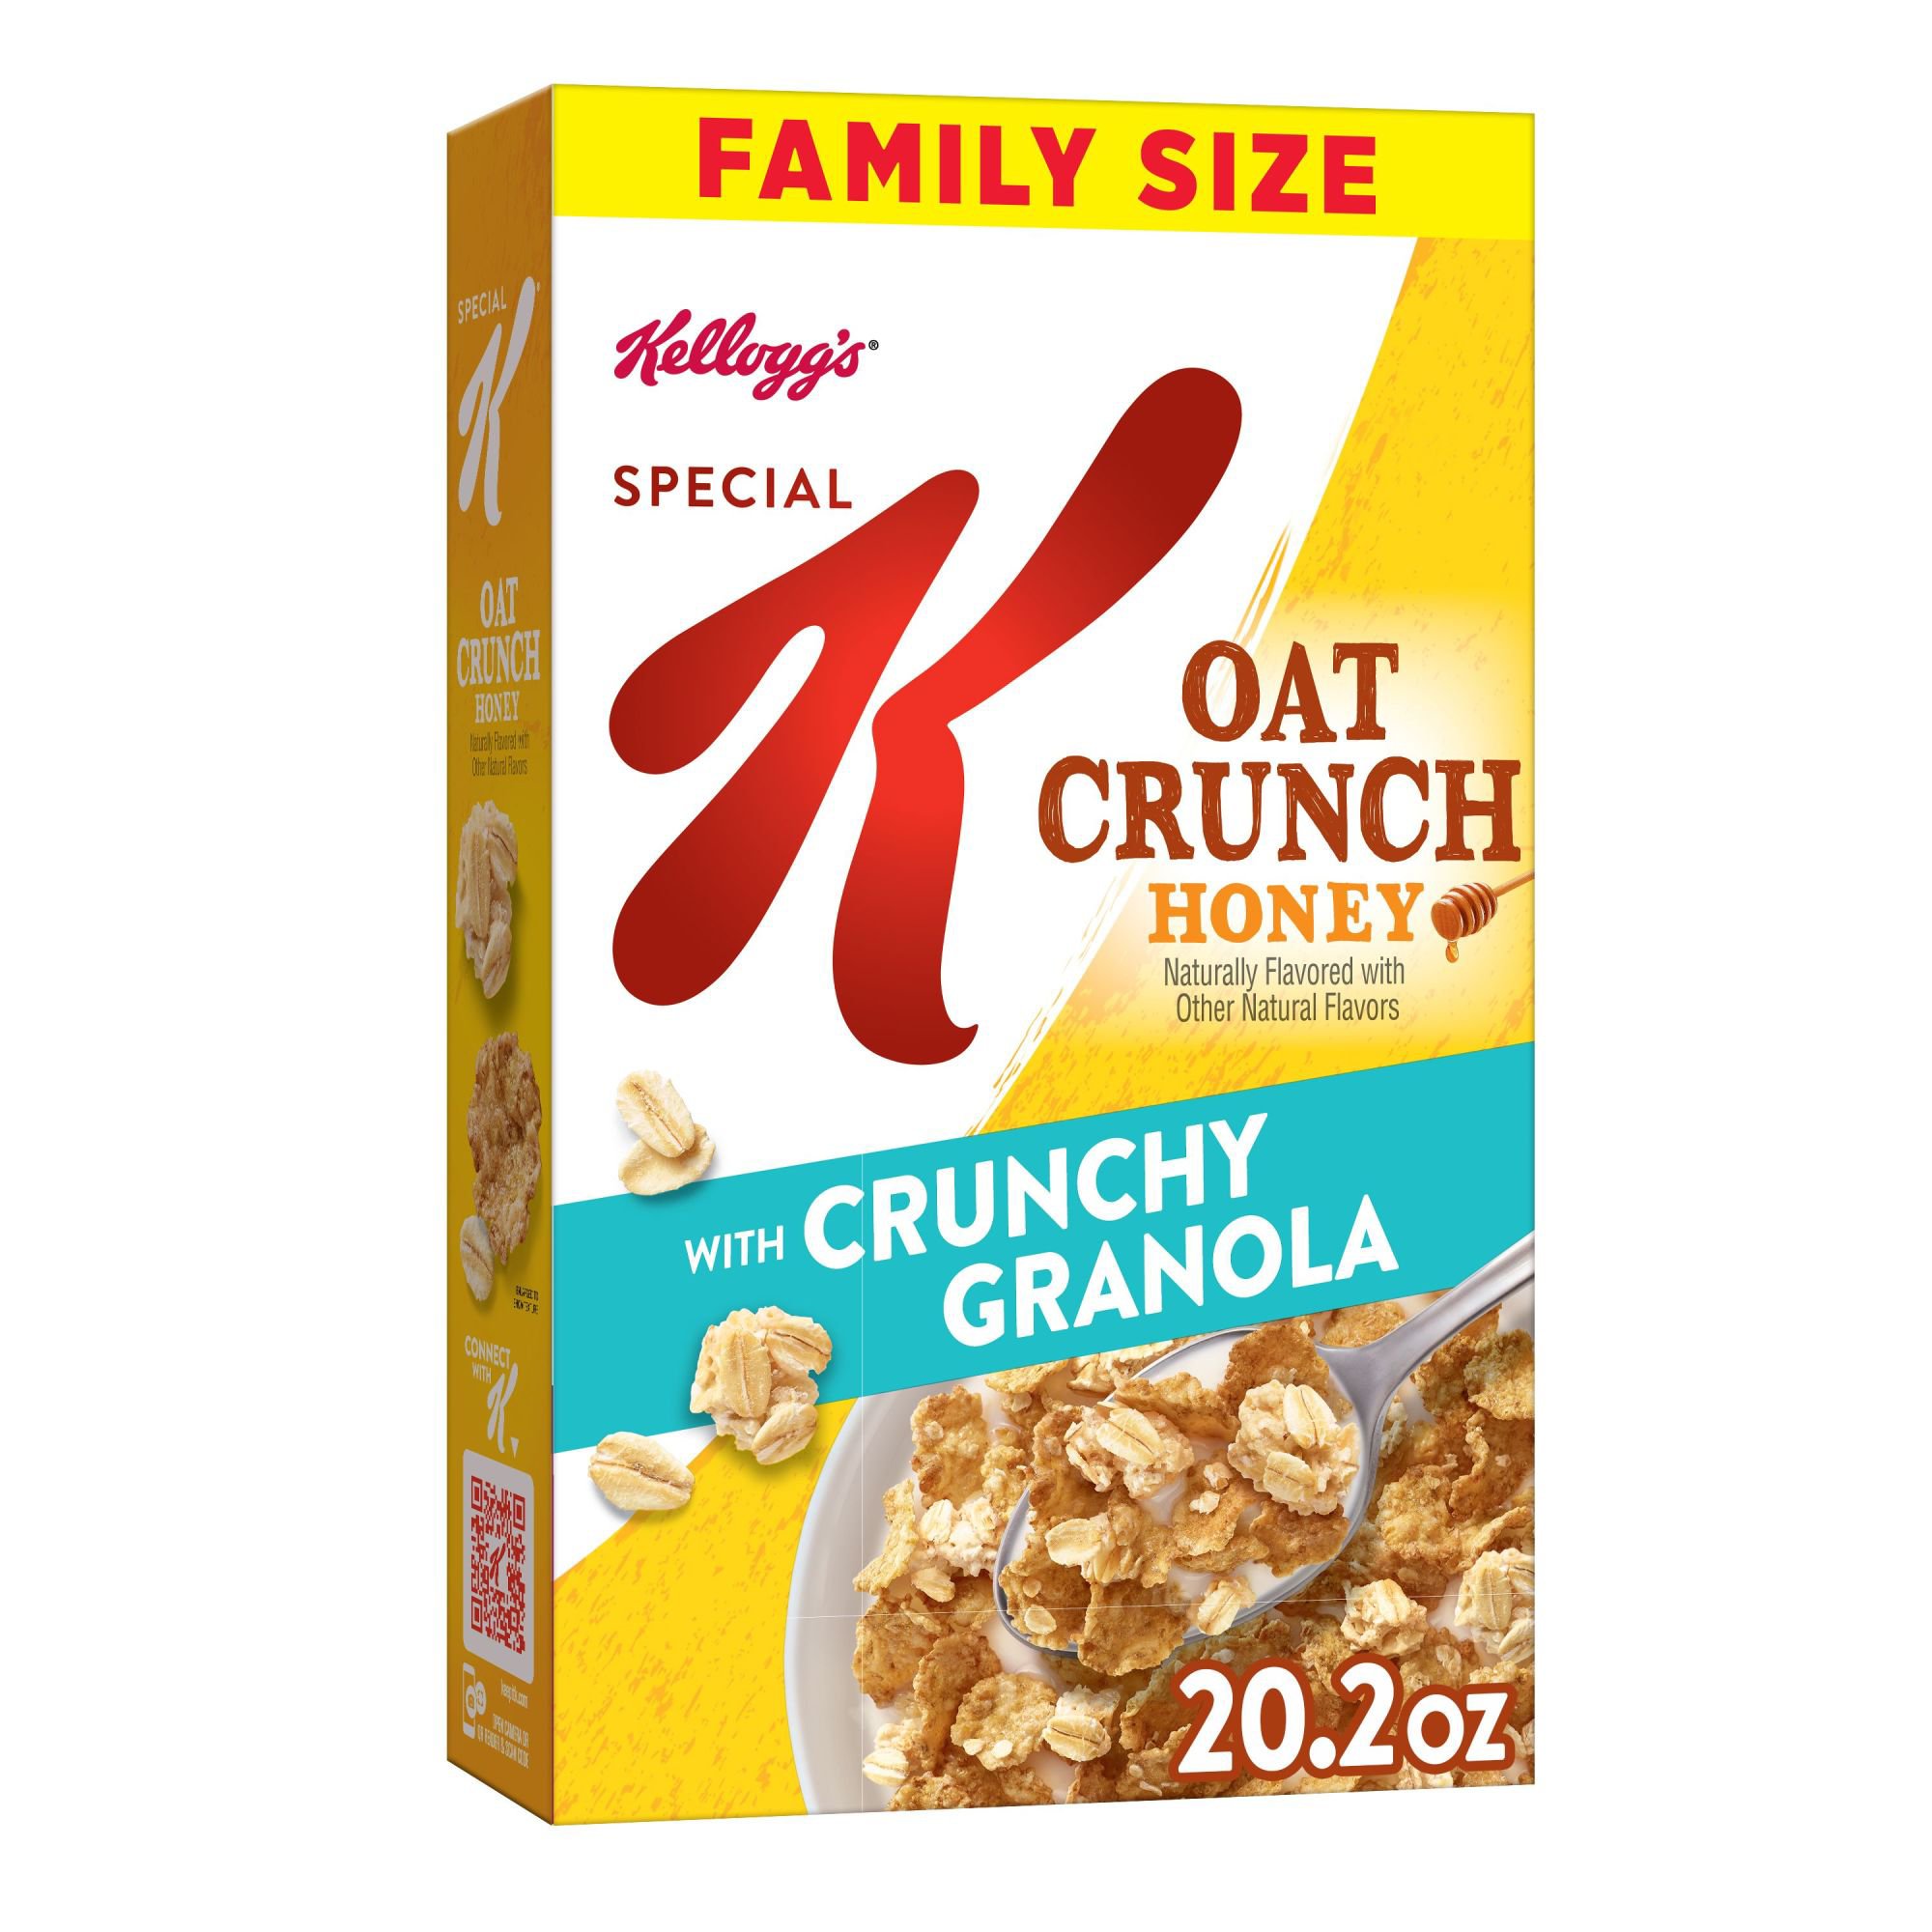 Morning Crisp Honey Nut Granola Clusters